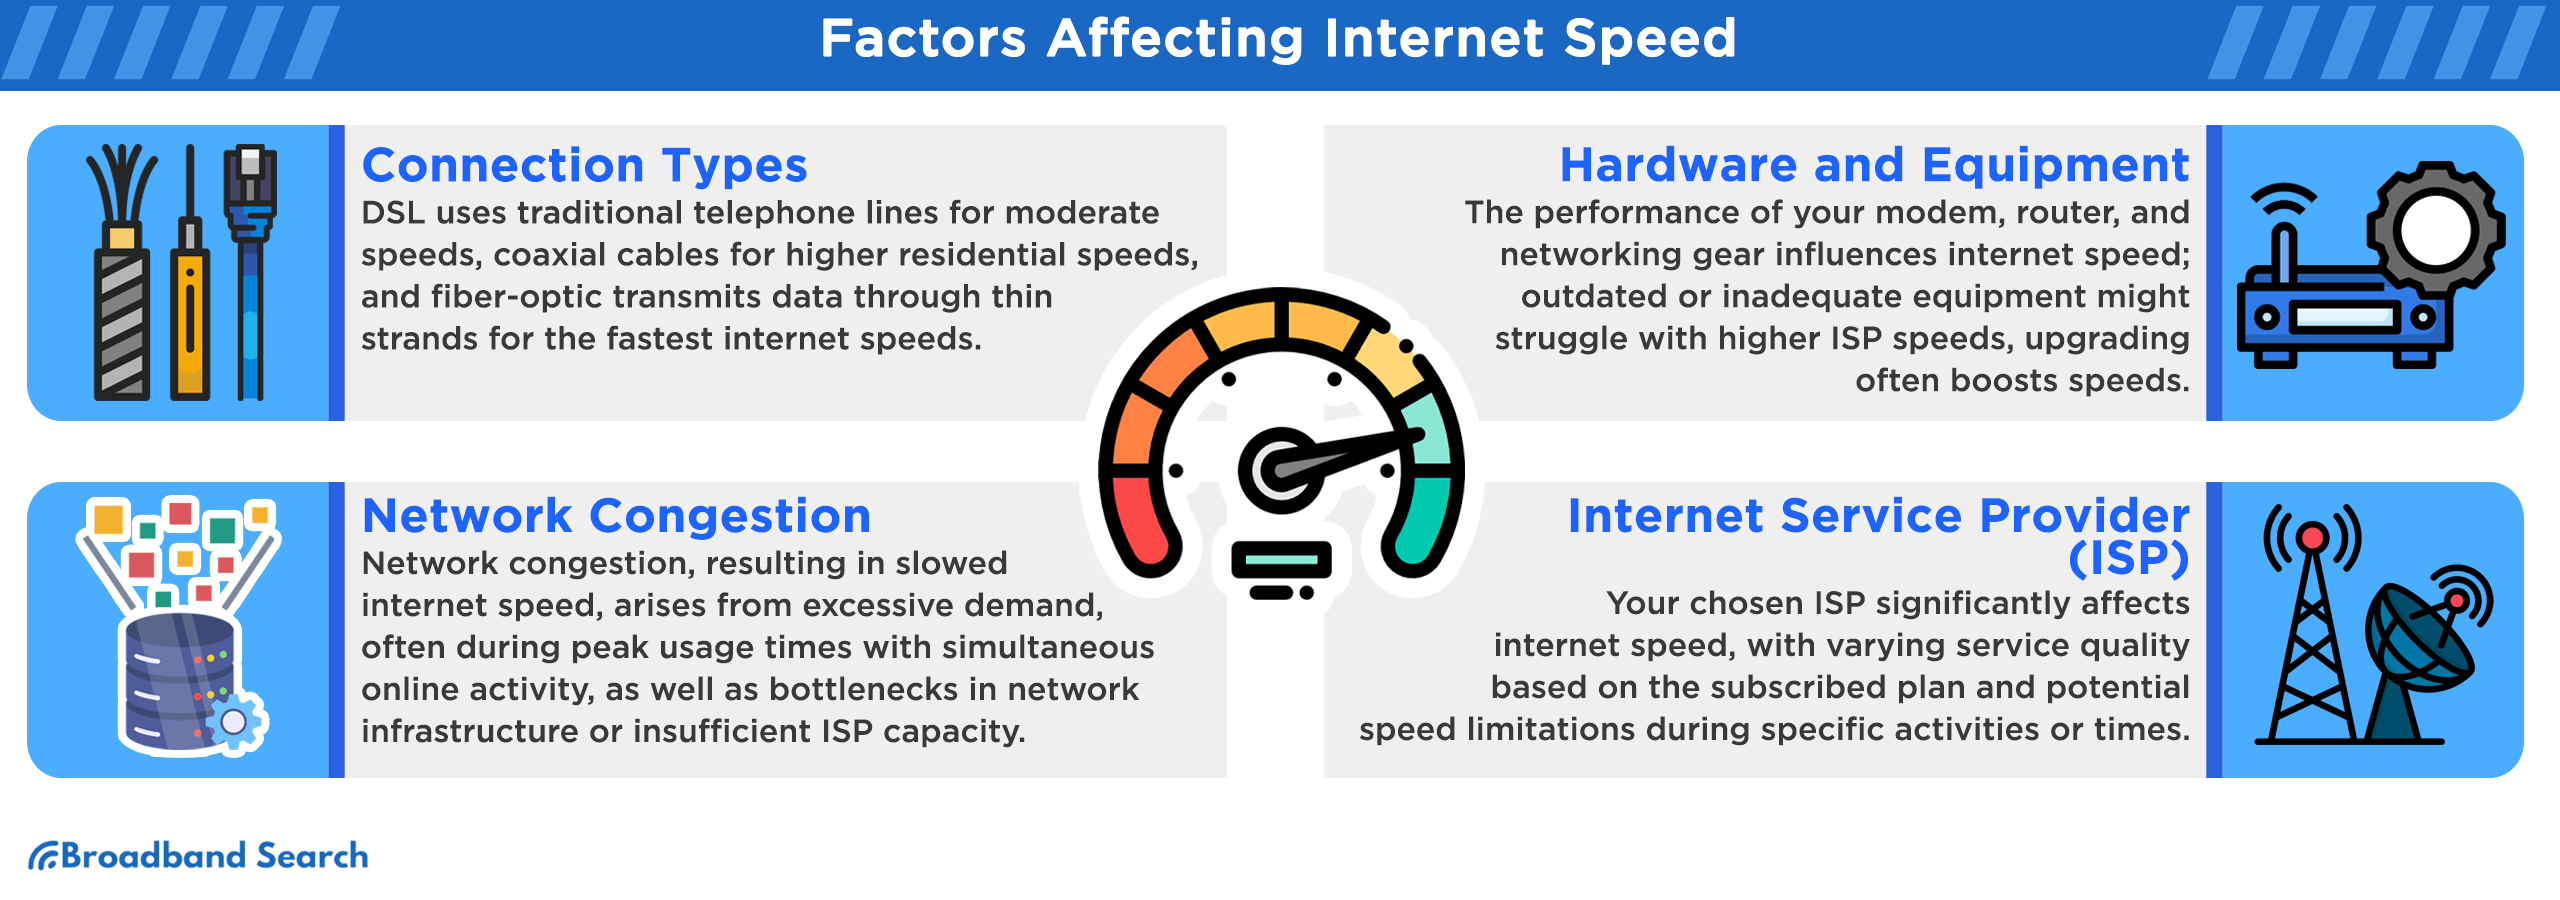 Factors affecting internet speed